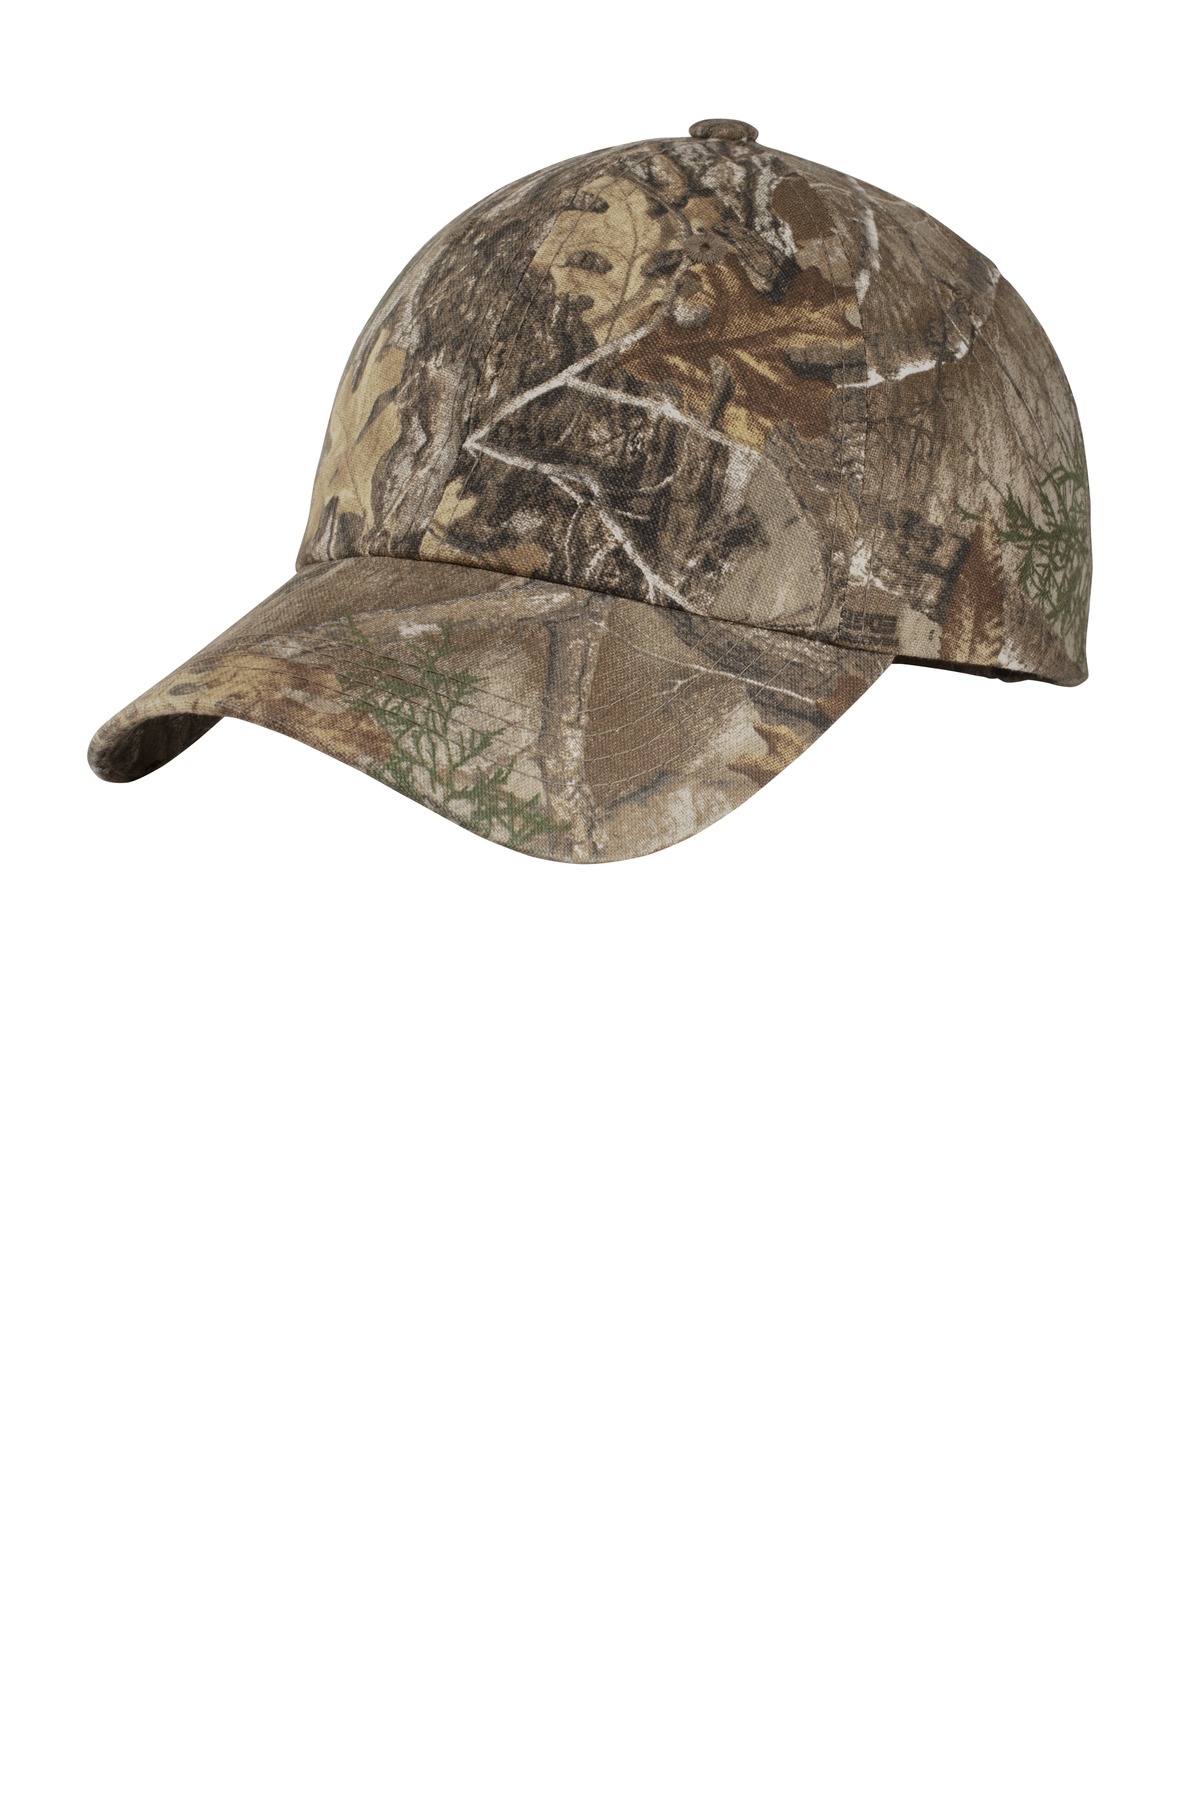 Garment Washed Camo Baseball Cap Realtree Edge Hunting Hat Camouflage NEW 